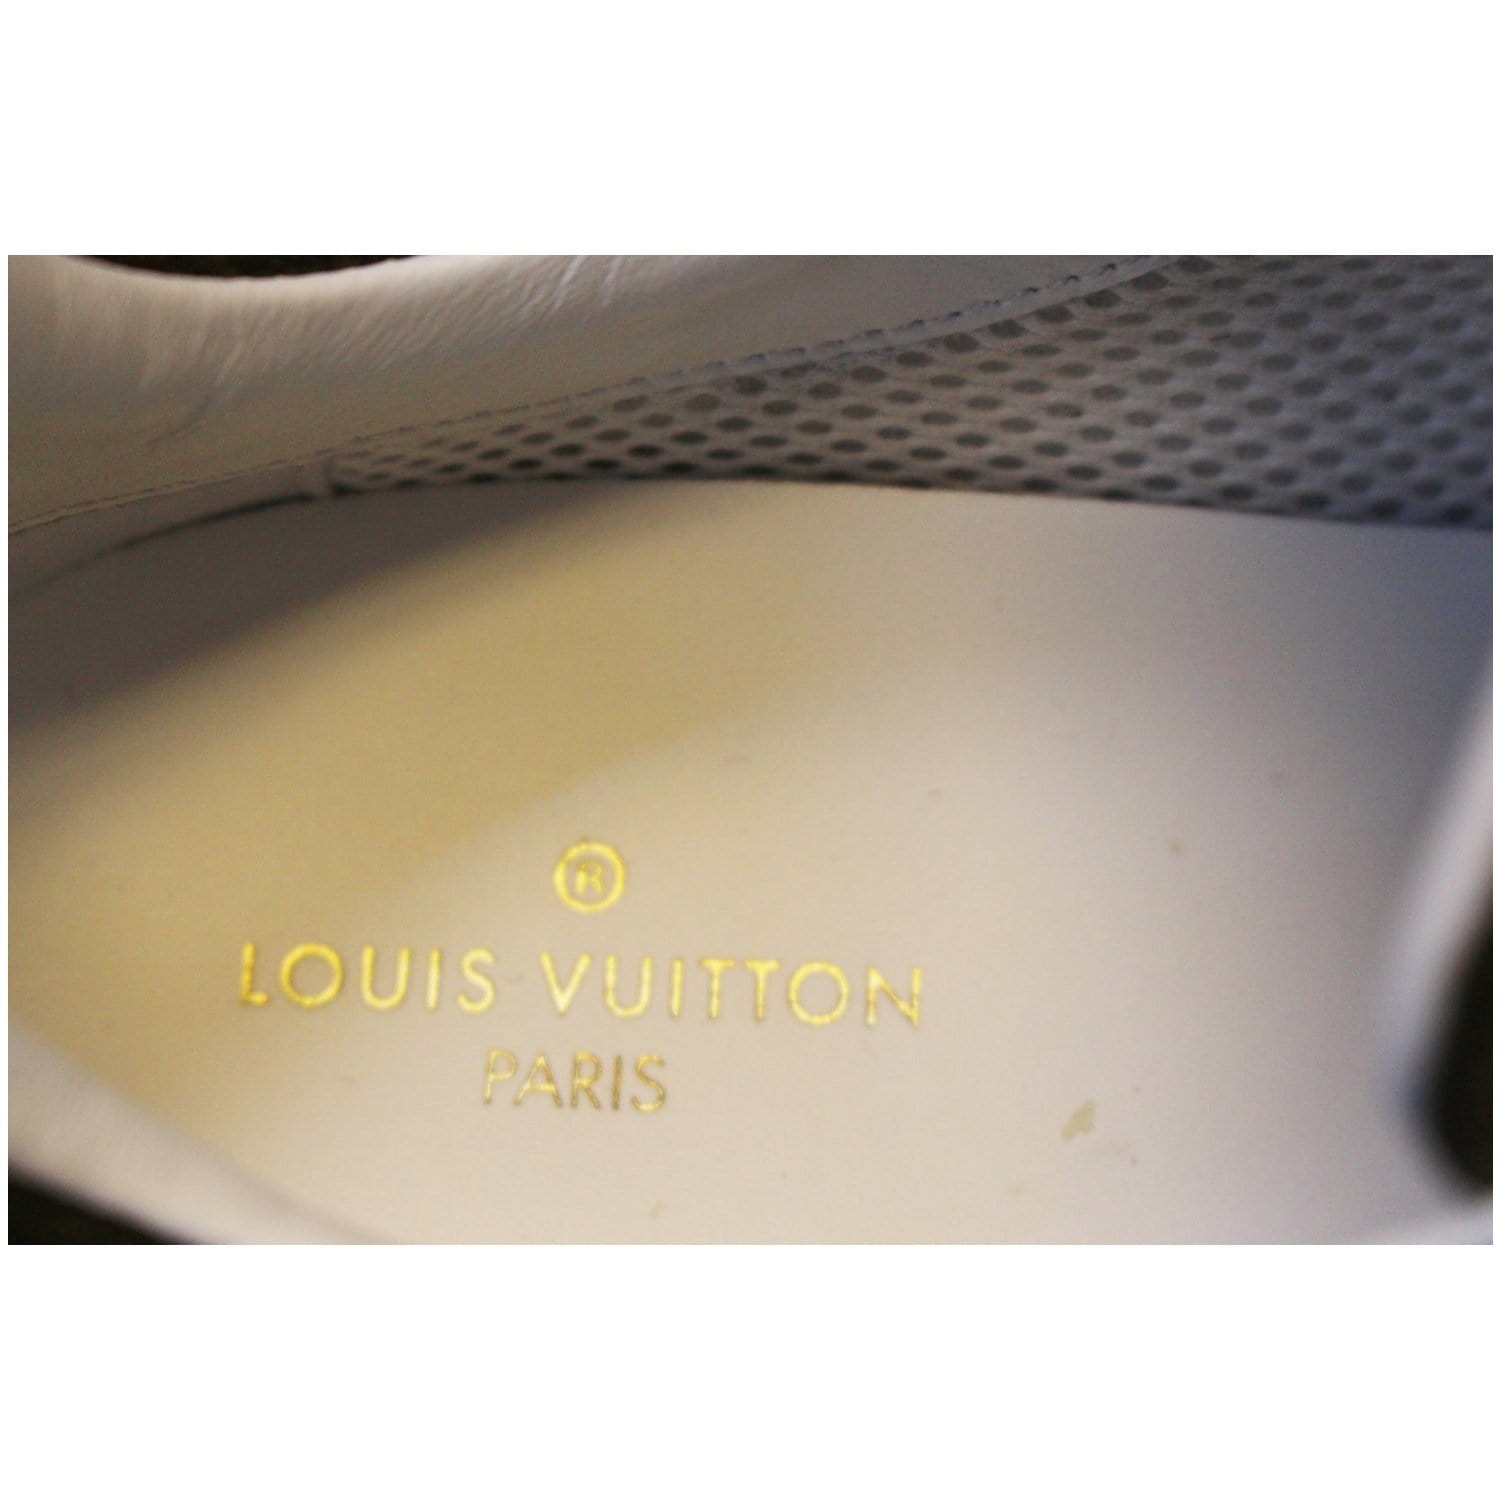 Louis Vuitton Run Away Blue Jeans Ladies Sneaker - Size 37 Euro / 7 US